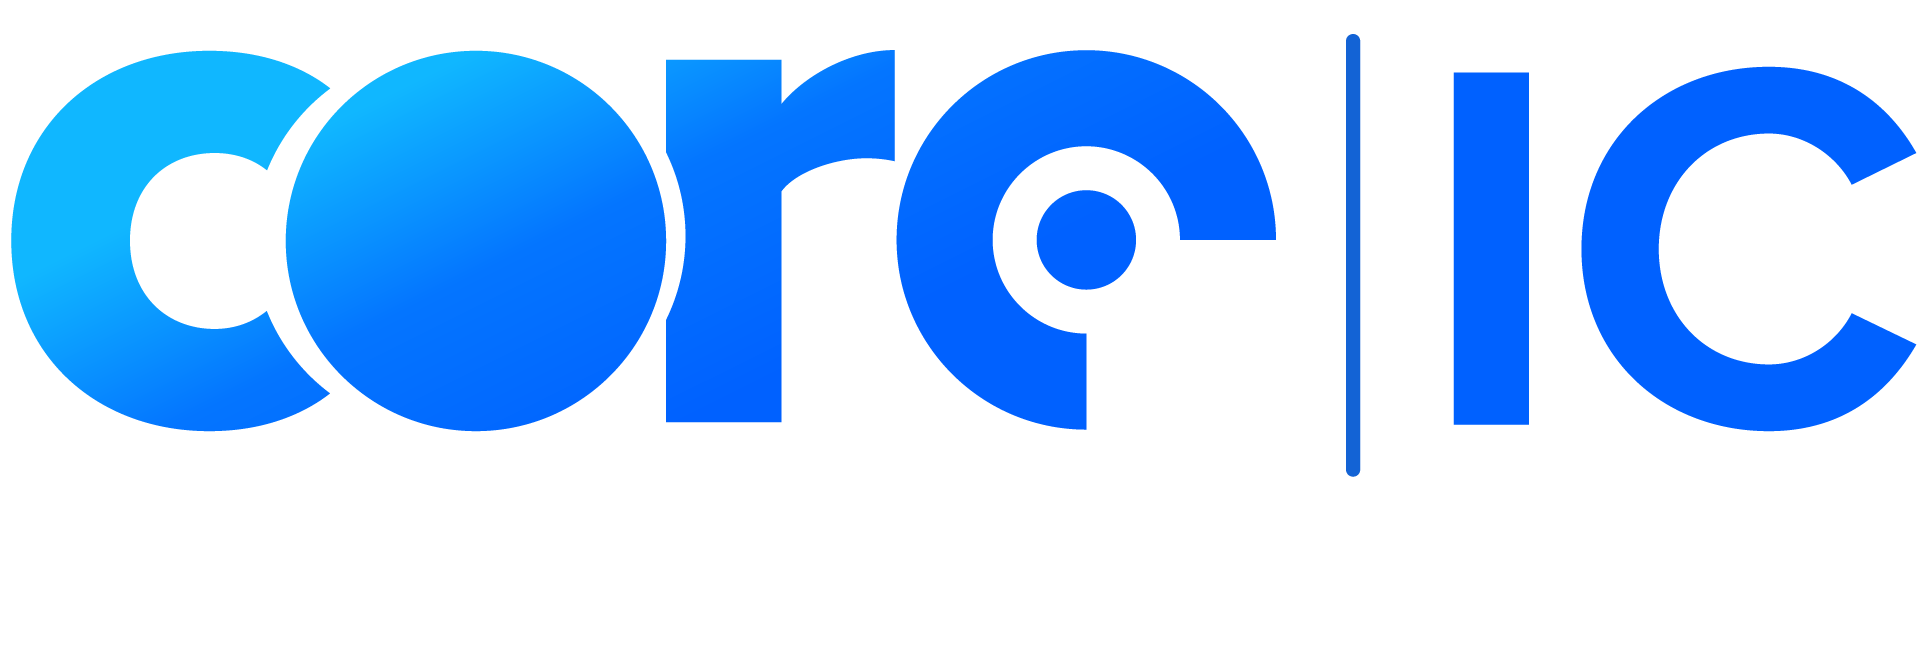 CORE-ic logo 